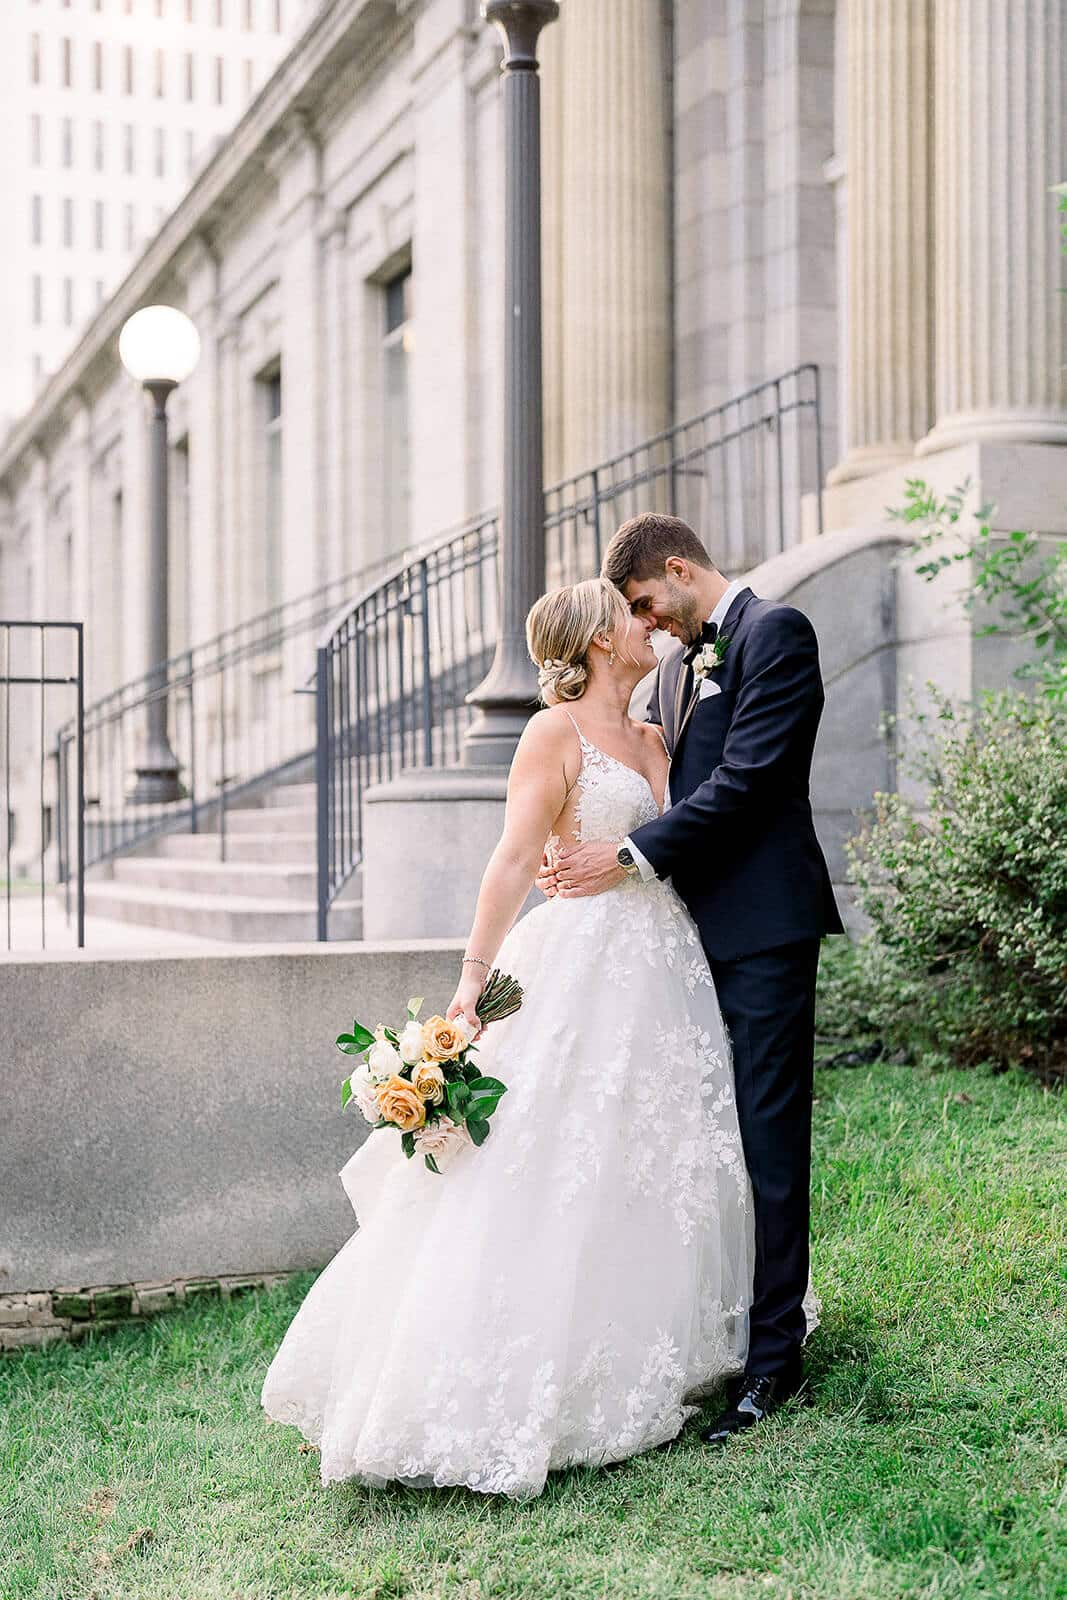 Renaissance Depot Hotel Wedding - Rachel Elle Photography, Minneapolis Wedding Photographer